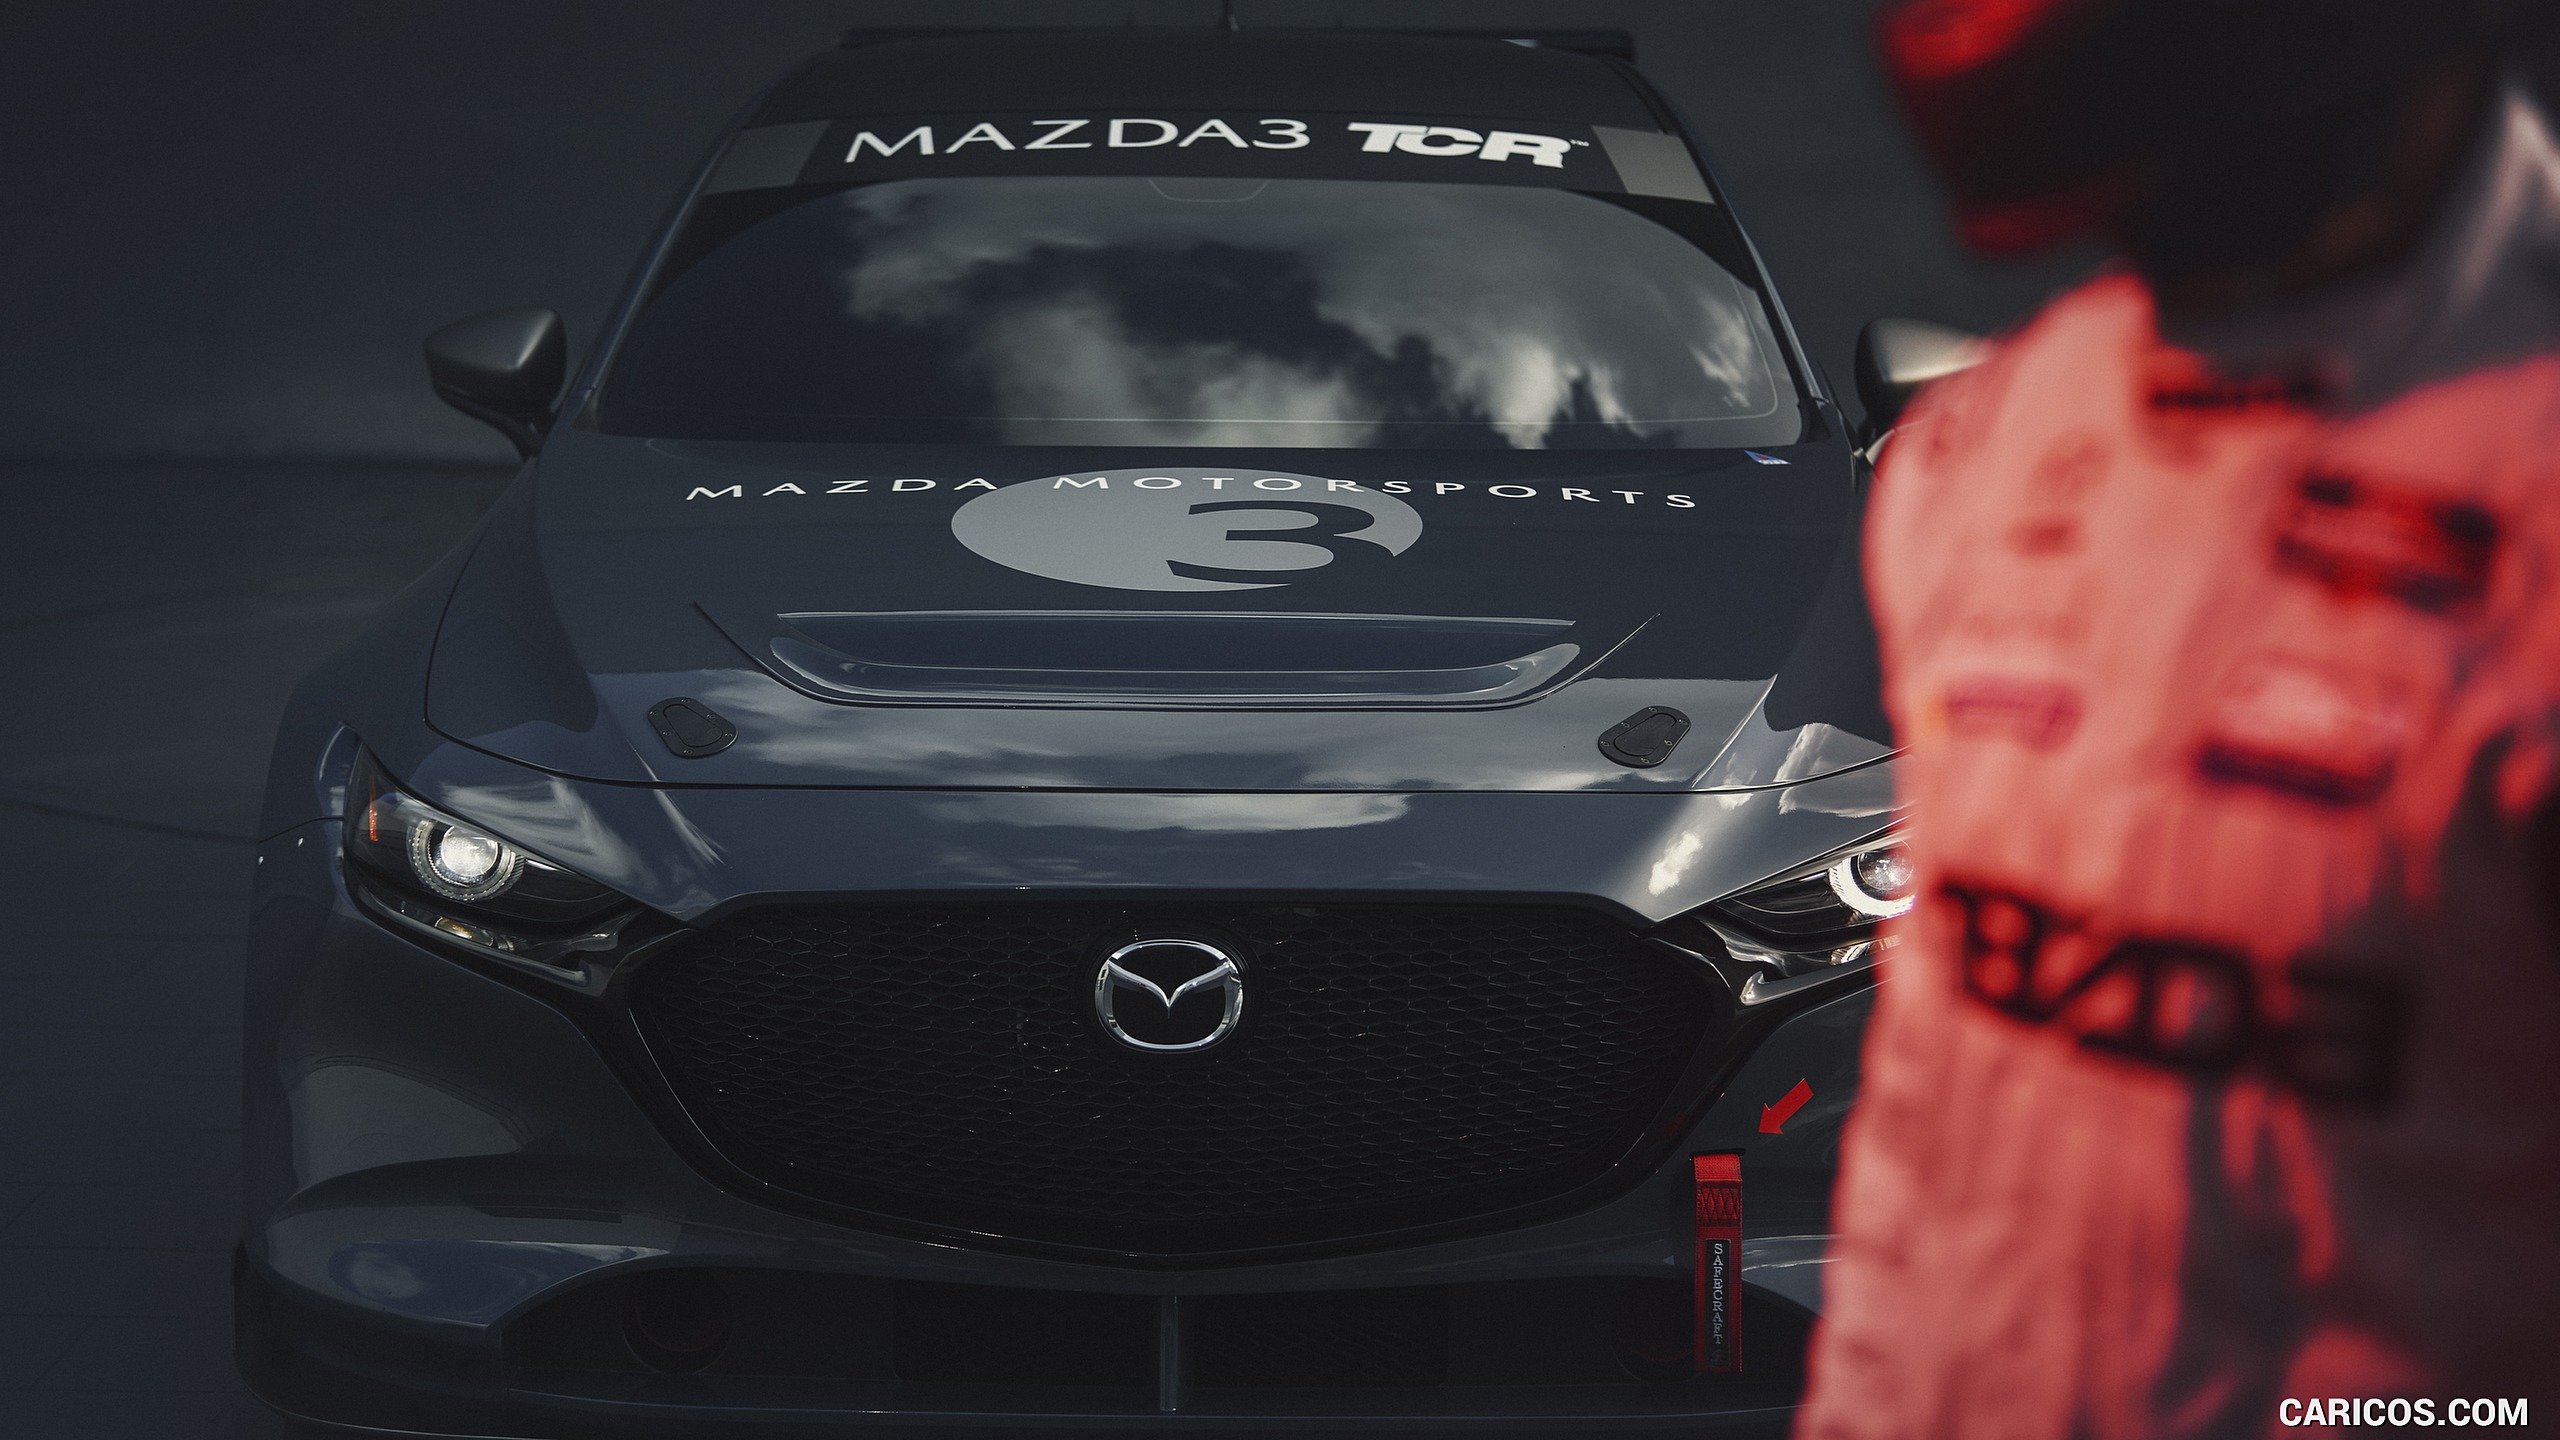 2020 Mazda3 TCR - Detail, #11 of 13